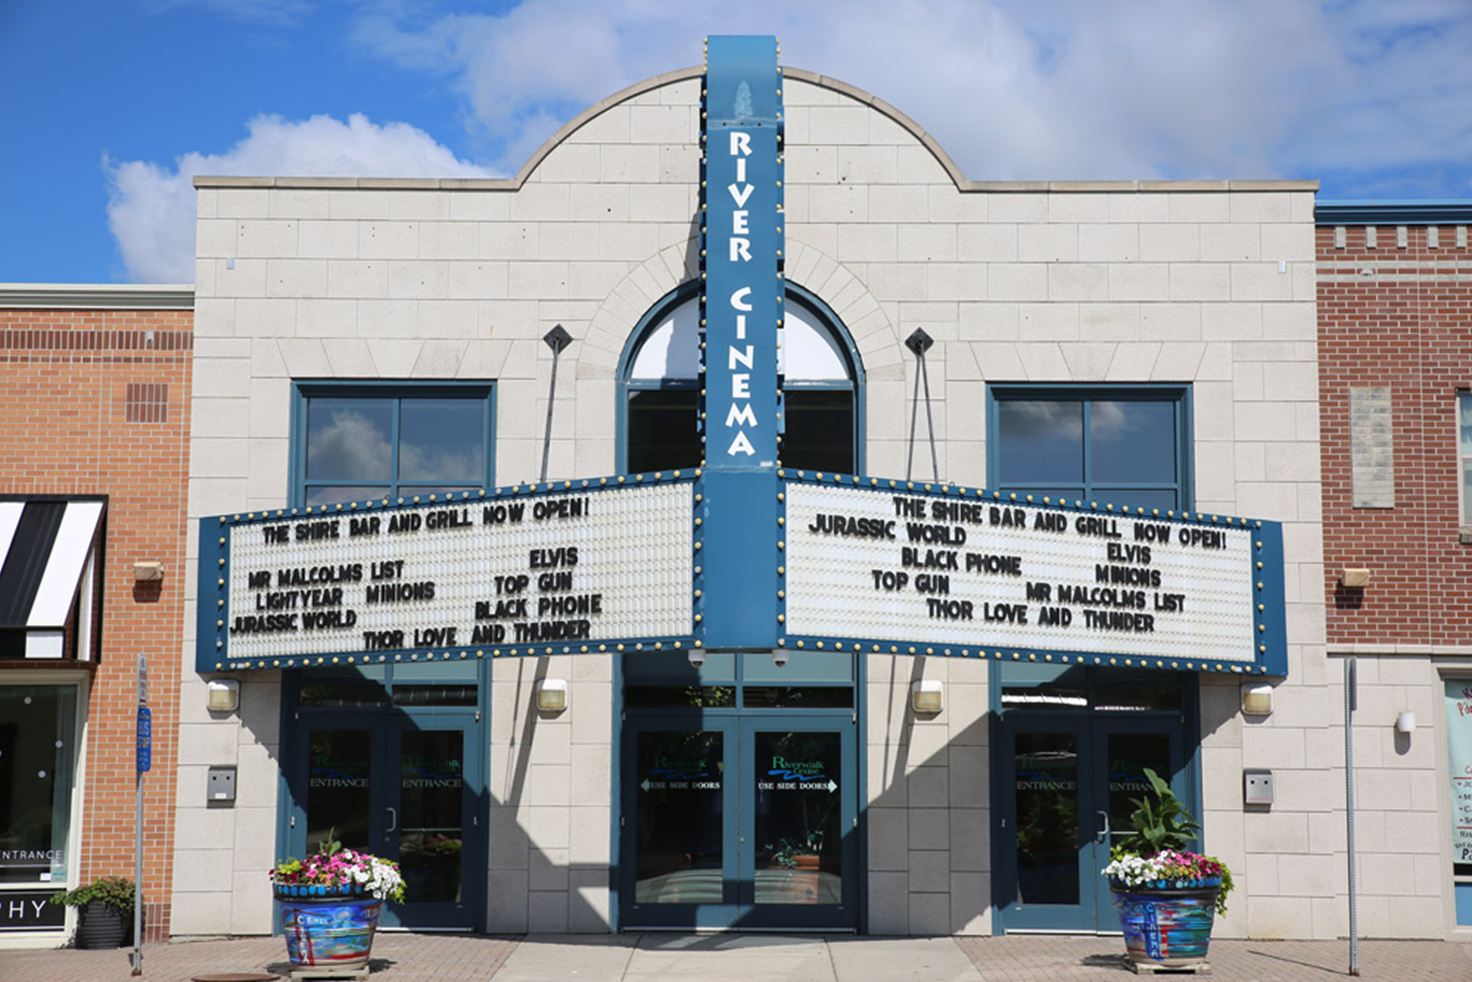 River Cinema